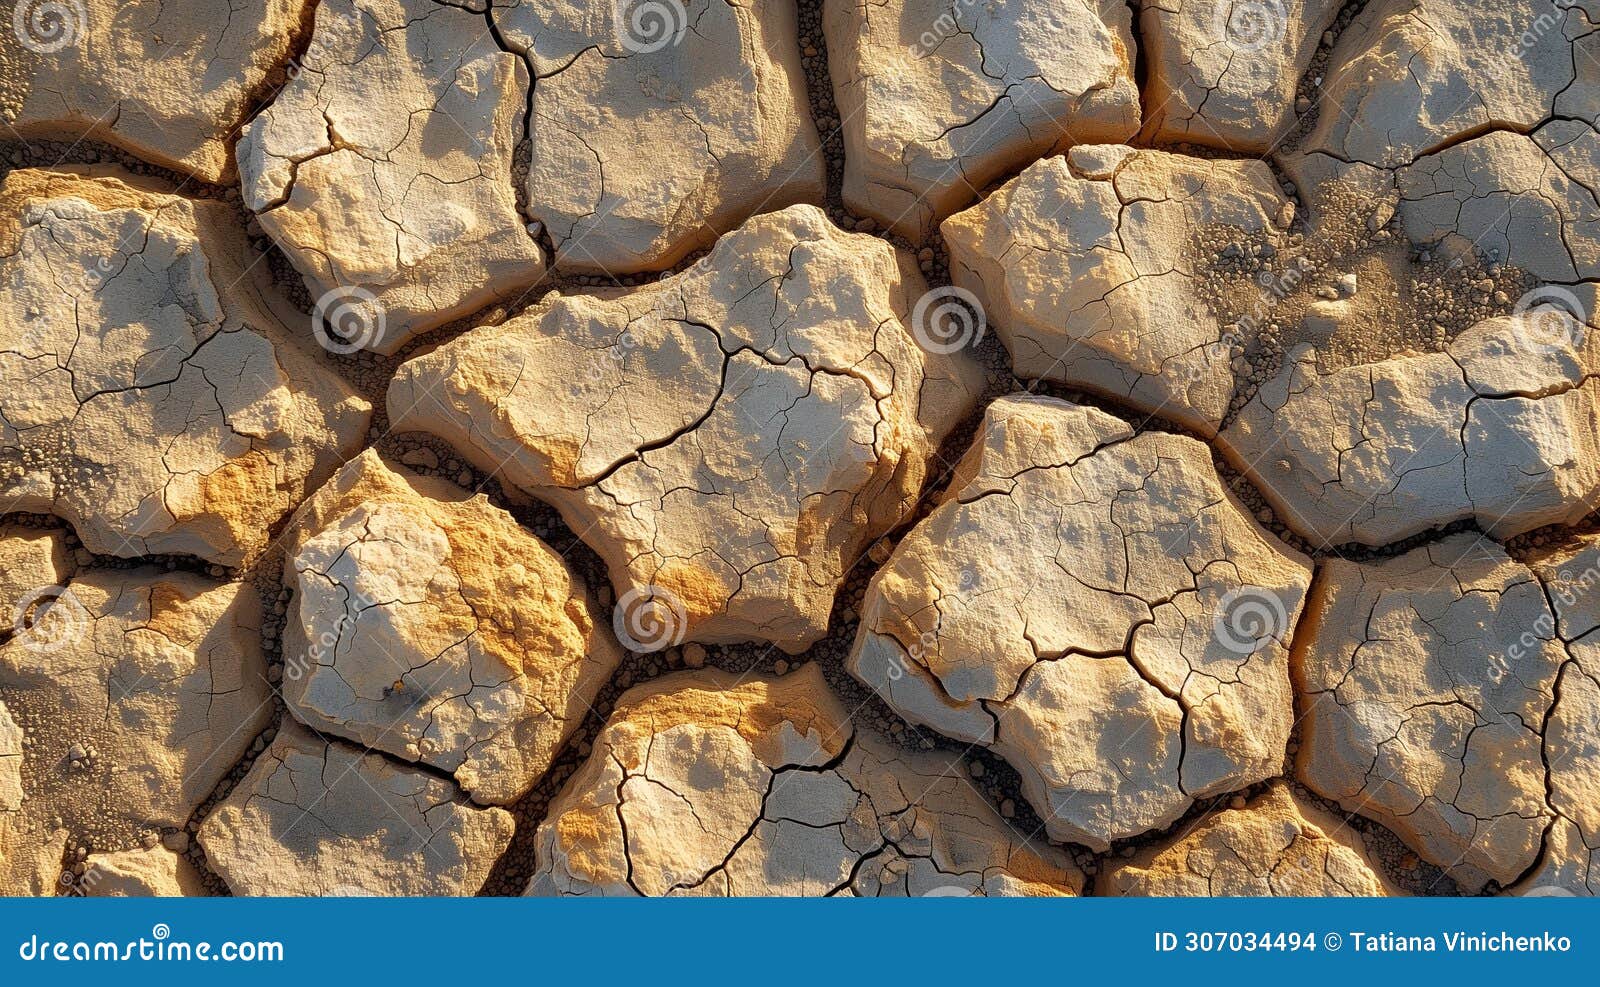 dry ground textures in the namib desert.